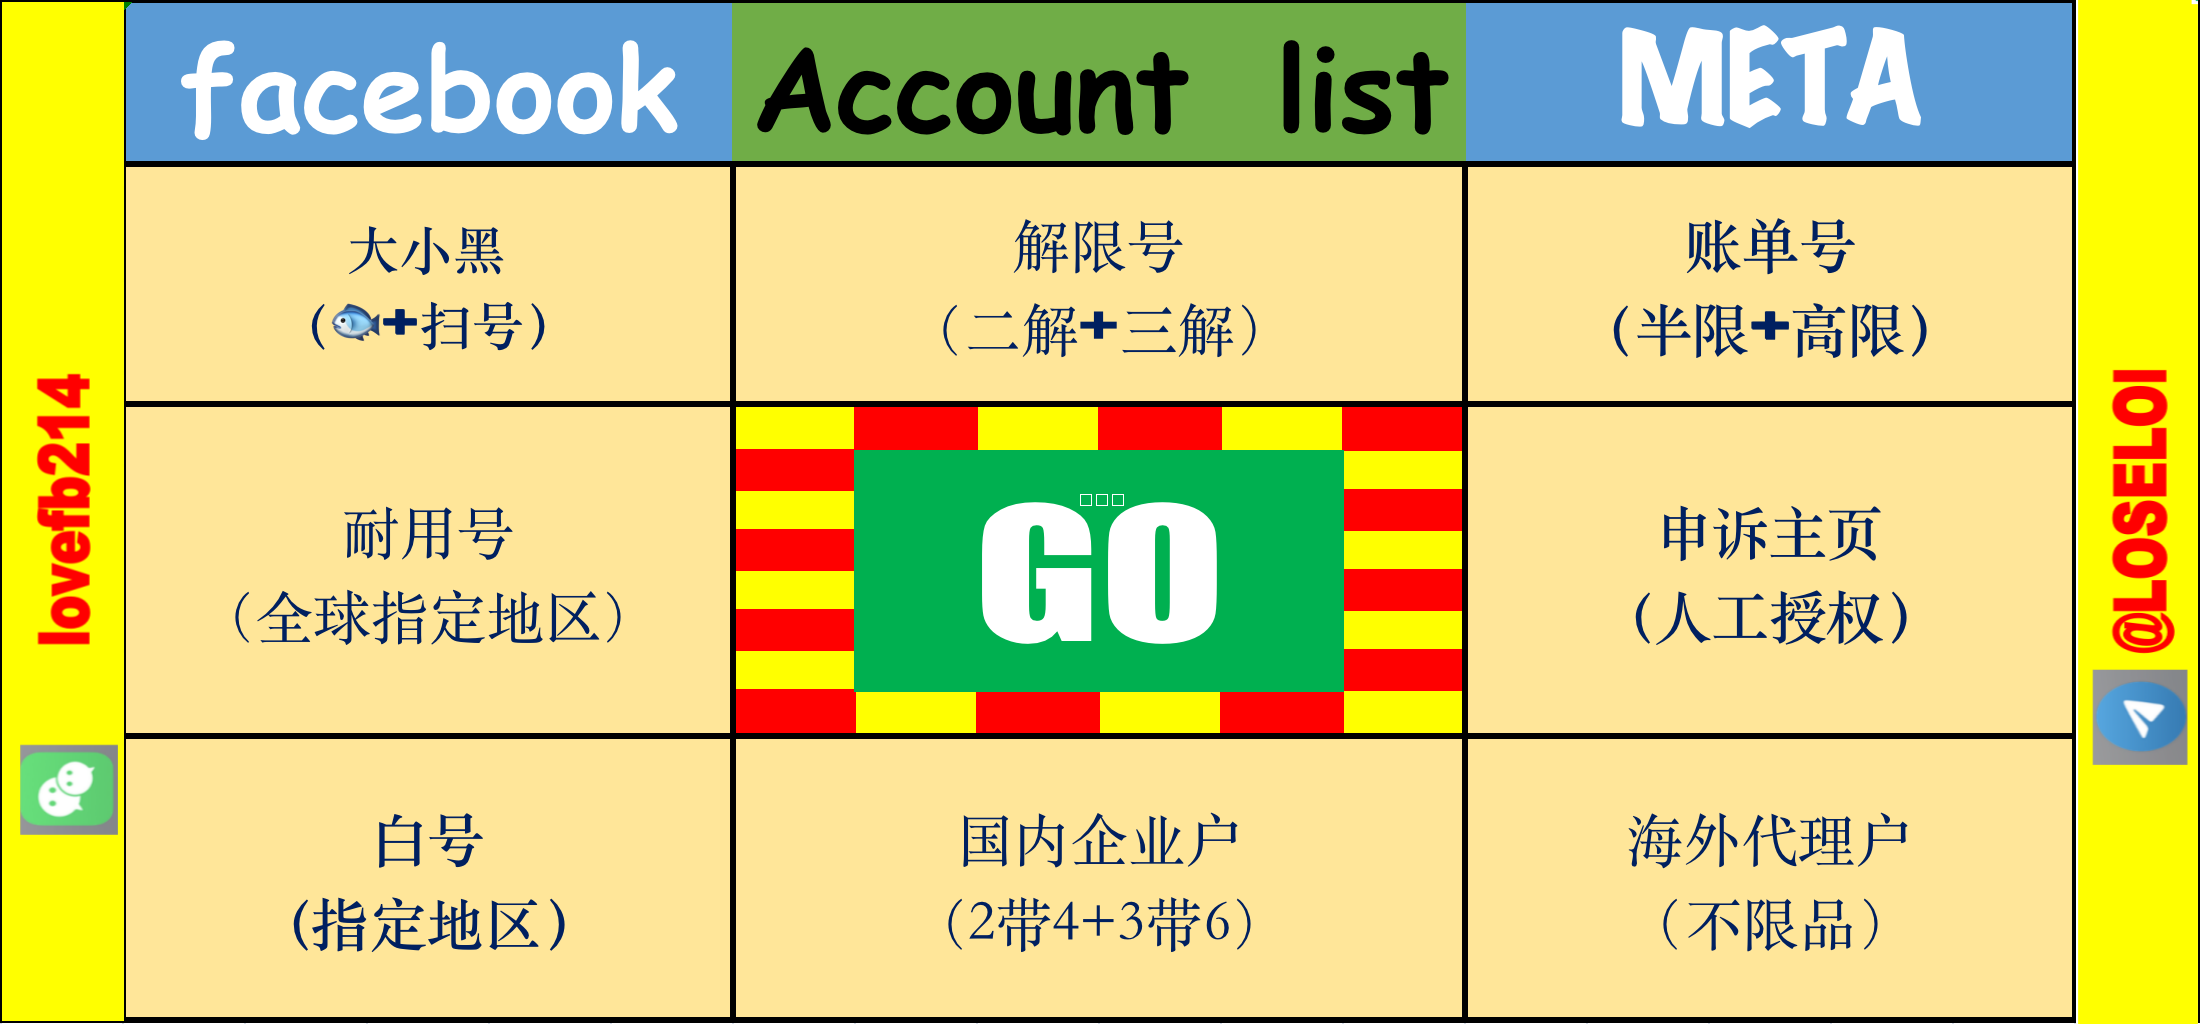 Facebook海外代理户+各类fb账户账号资源